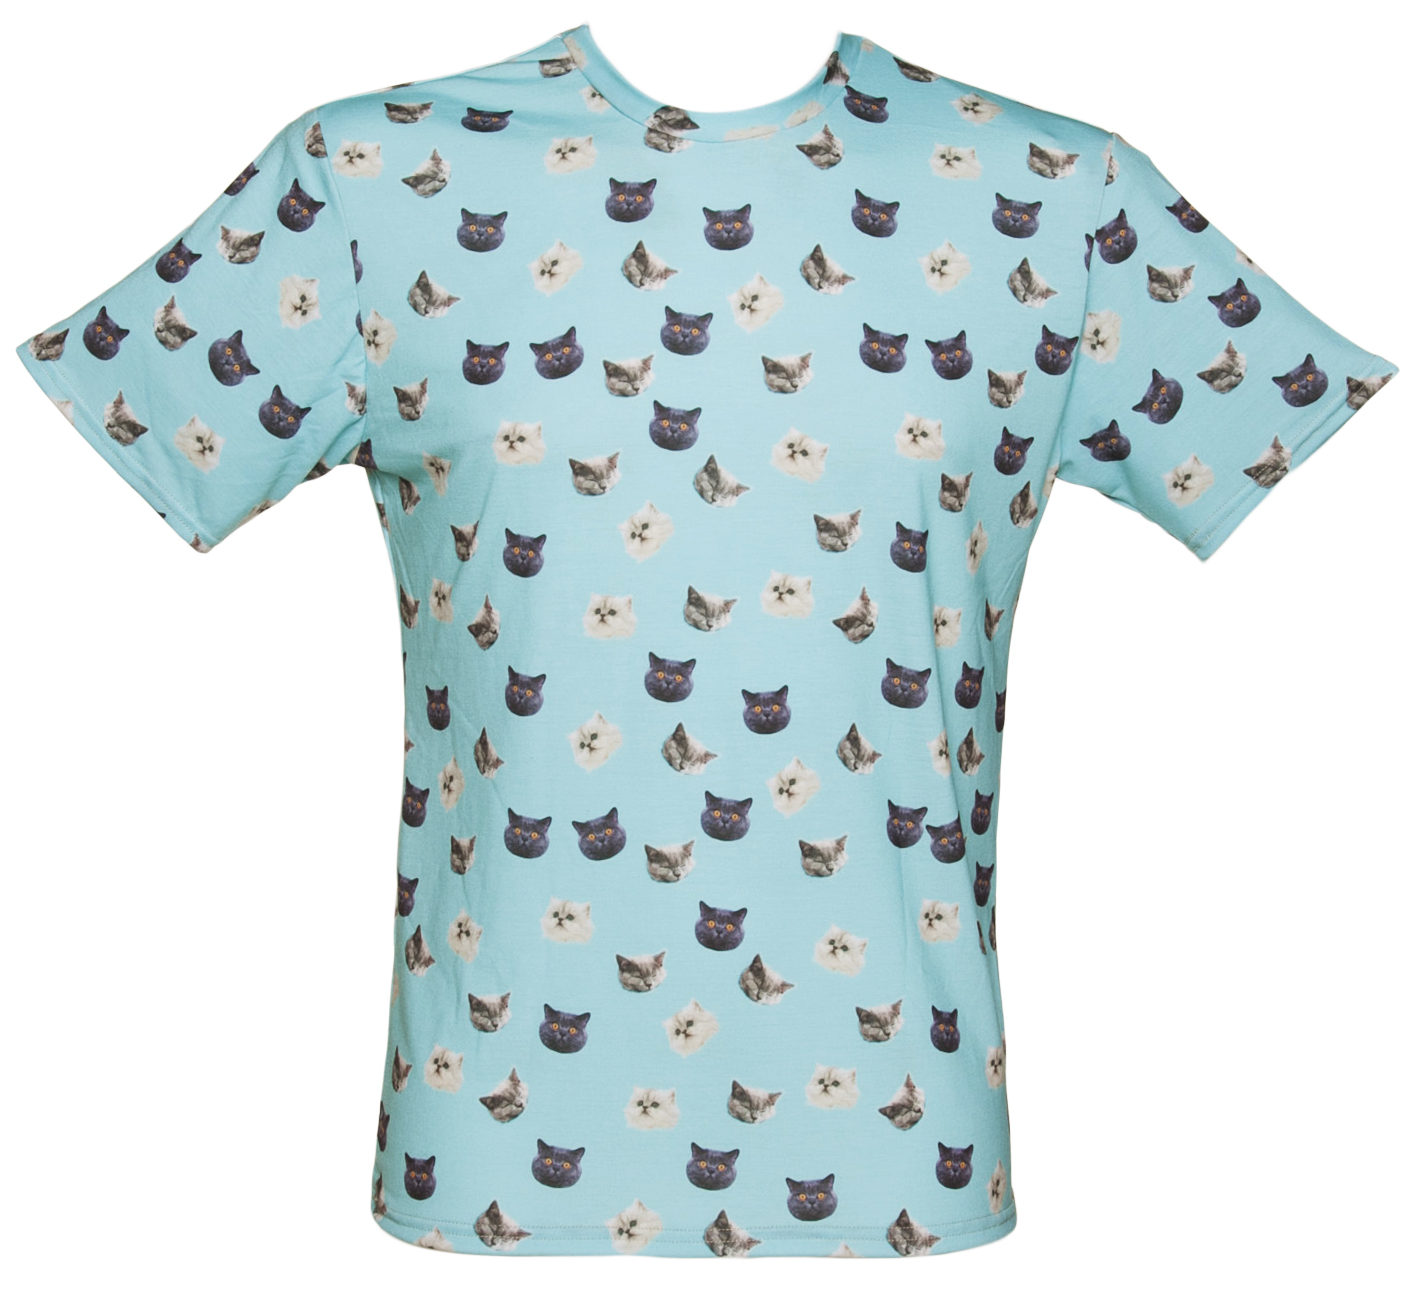 Unisex All Over Kitties Print T-Shirt from Mr